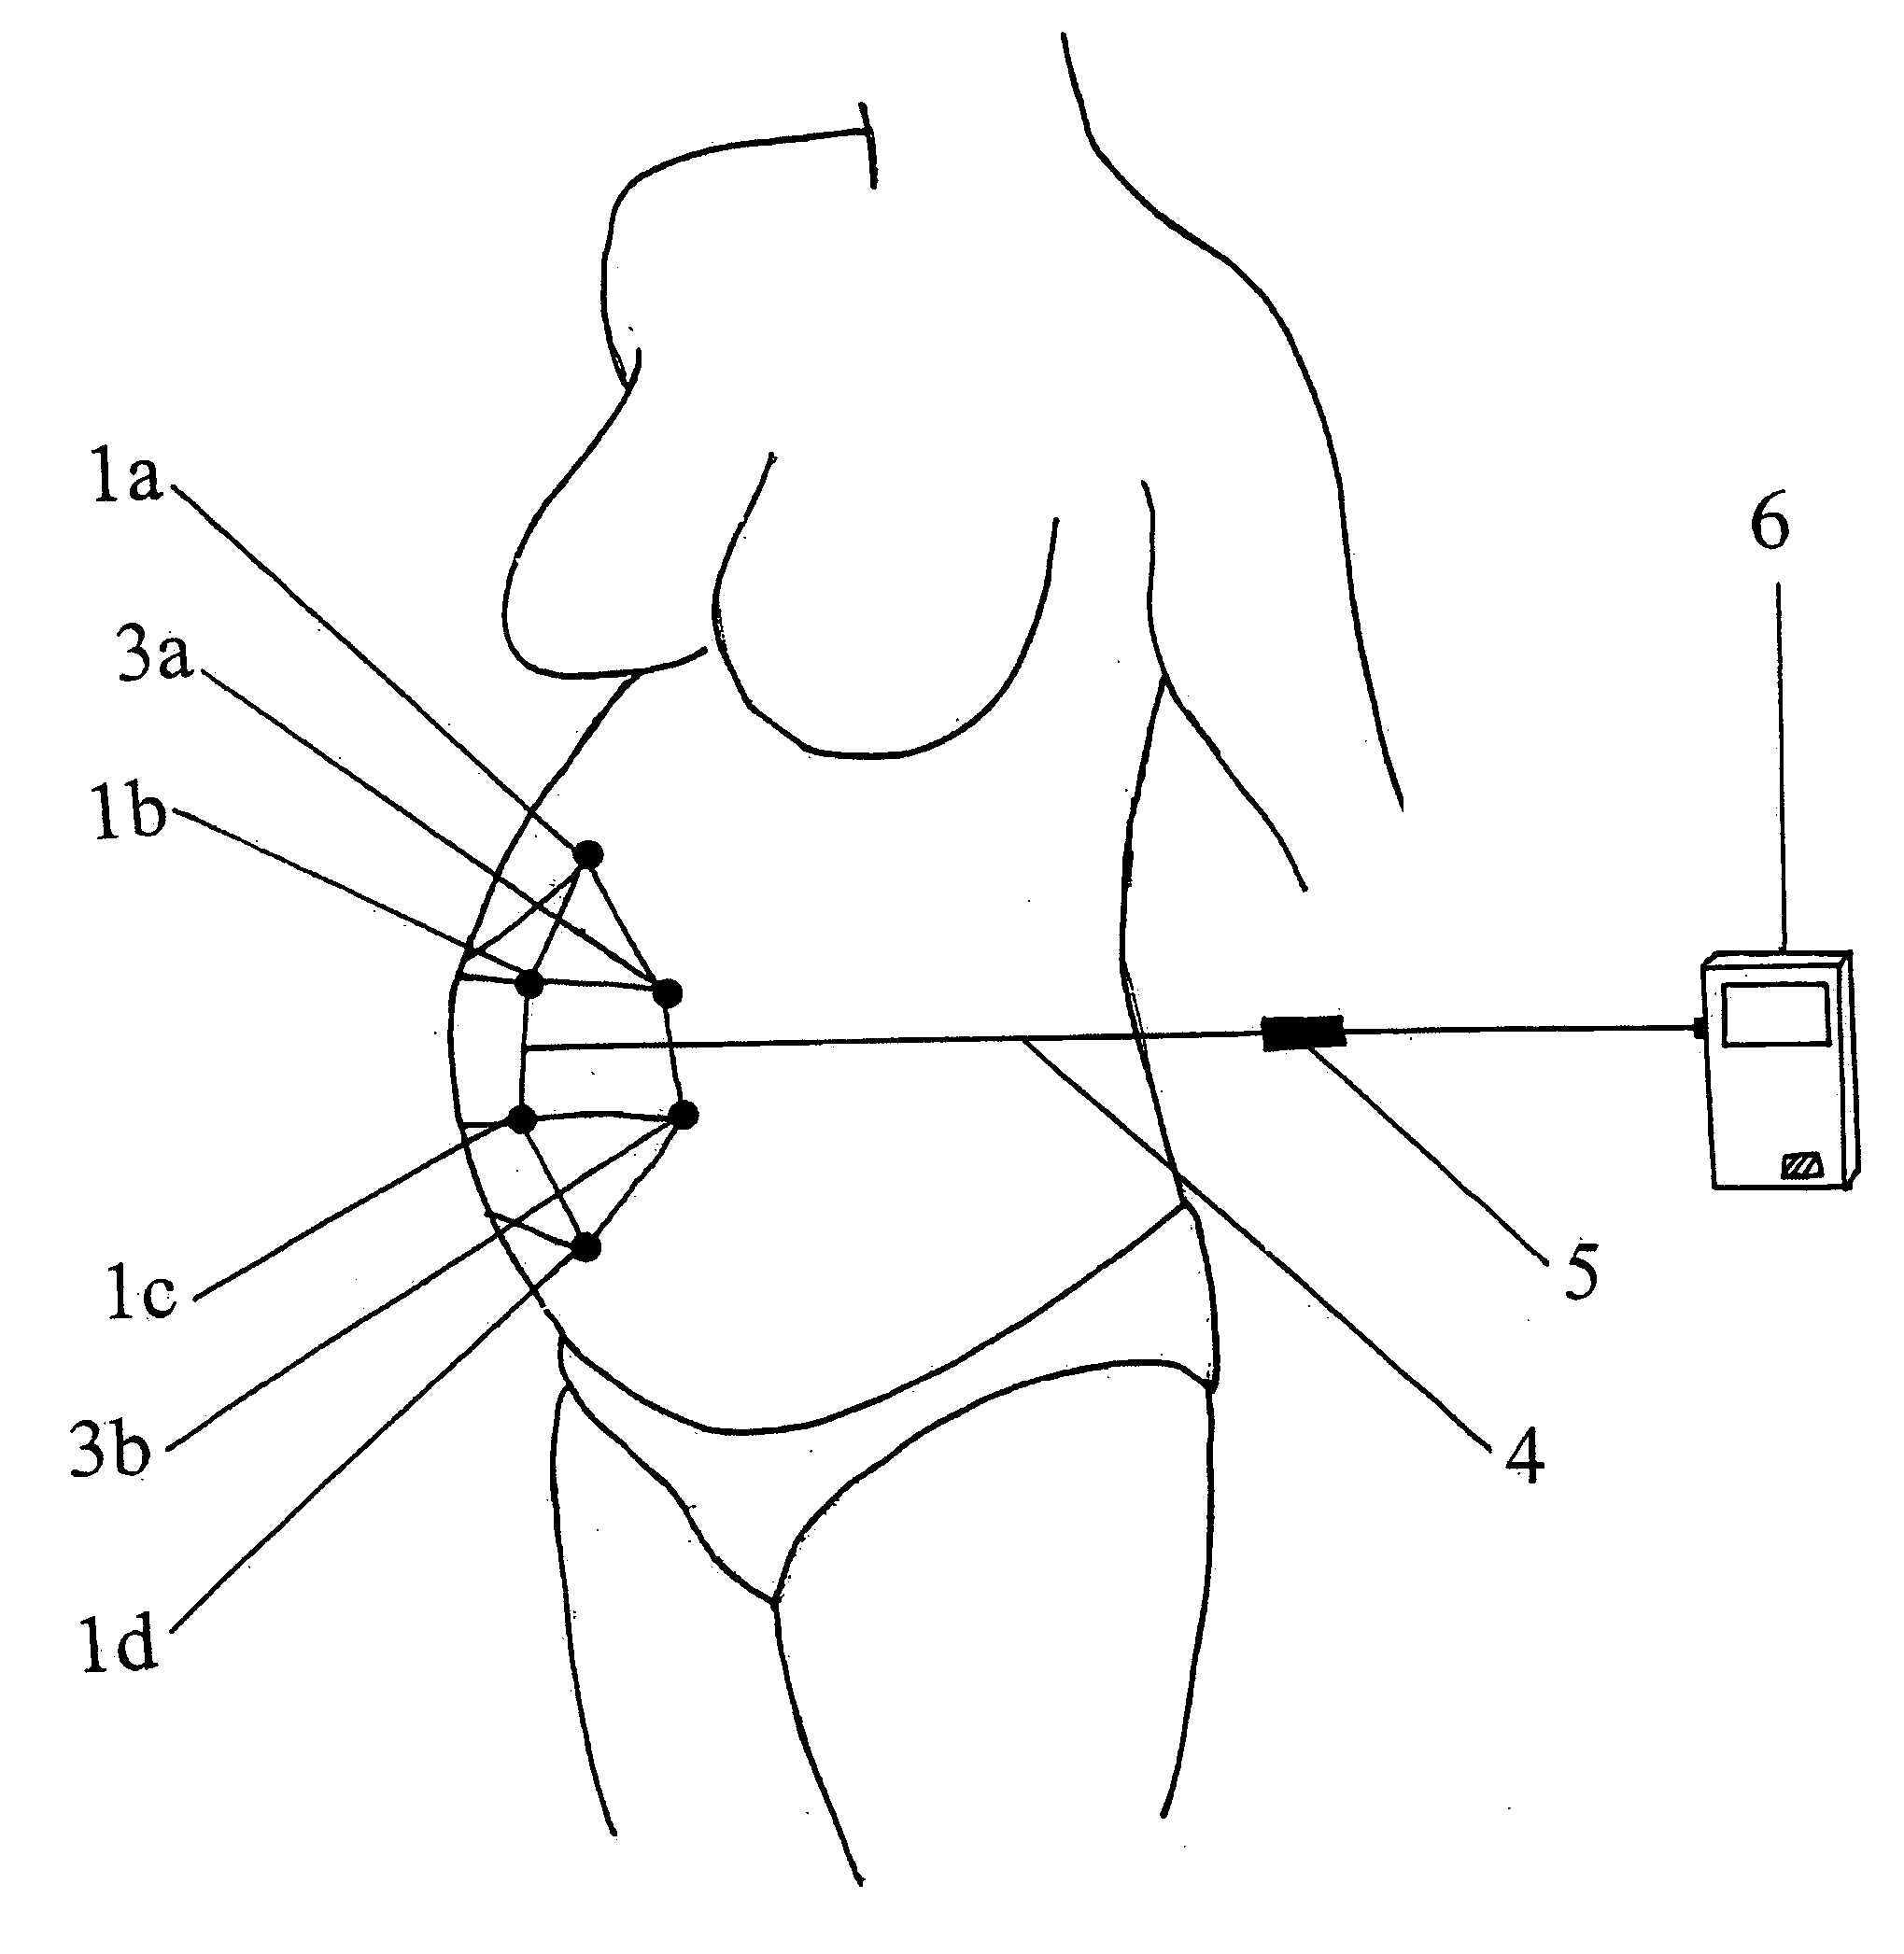 Maternal-fetal monitoring system